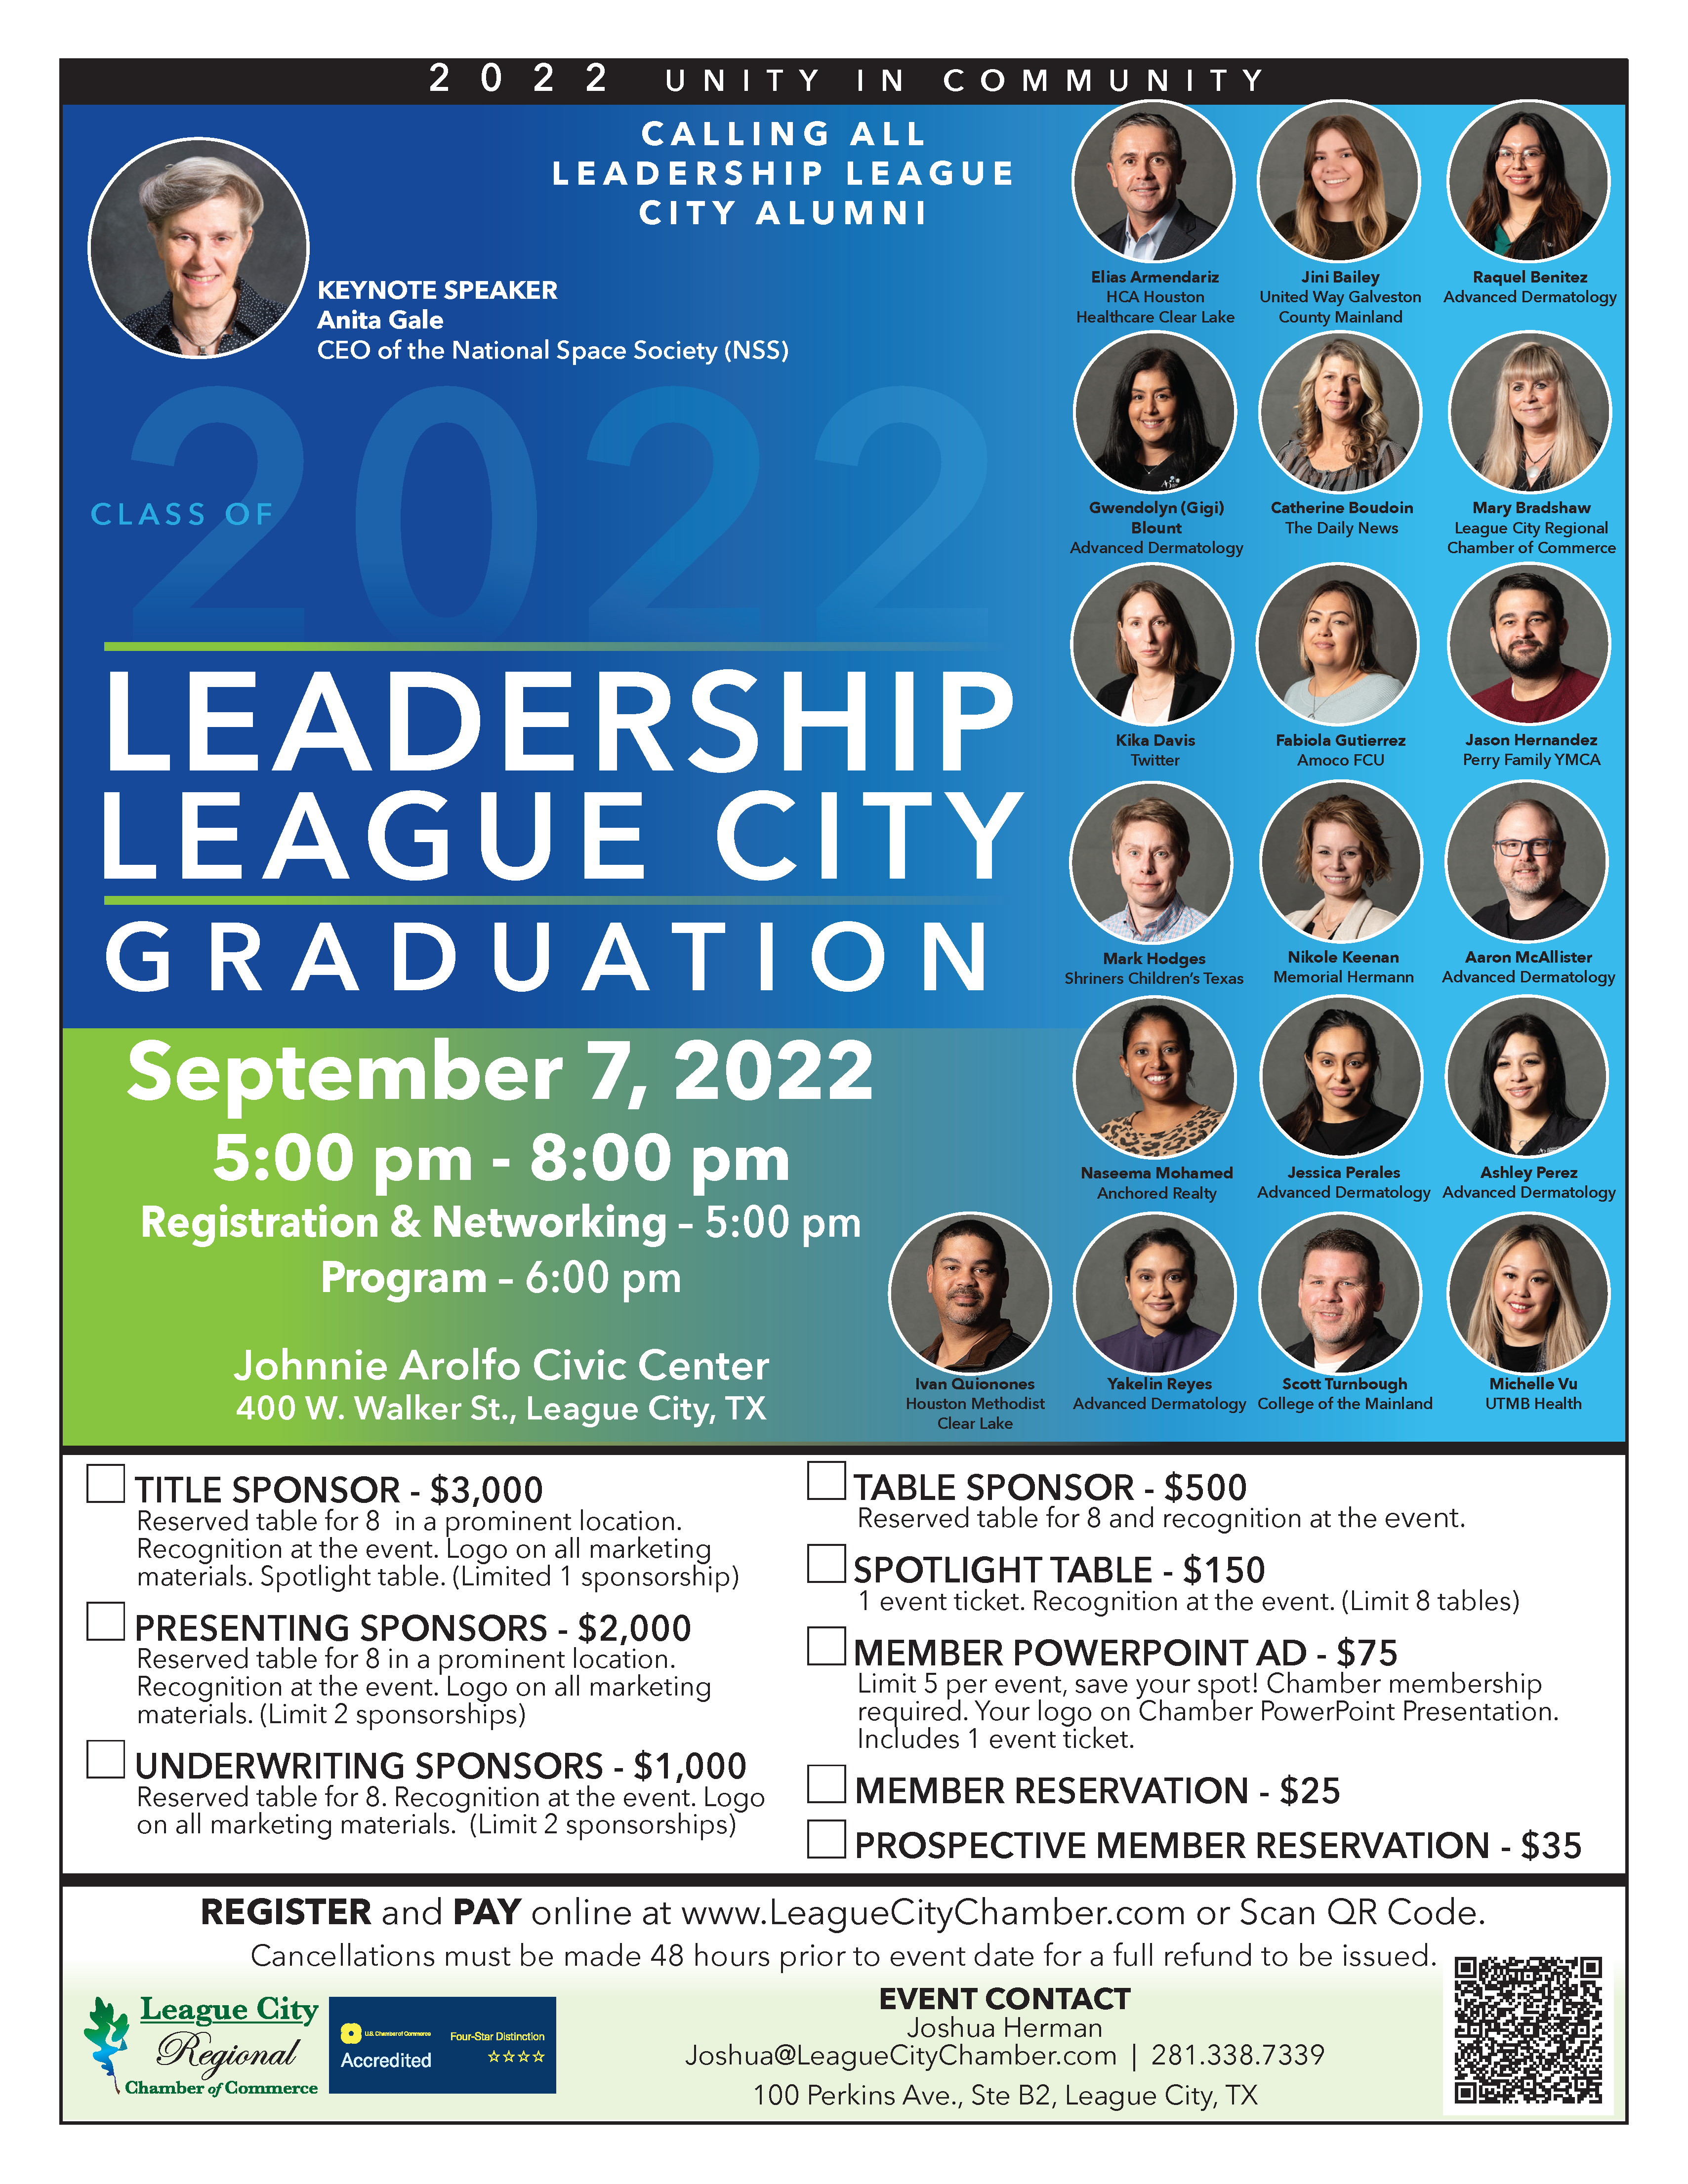 Image for Leadership League City Graduation is near!